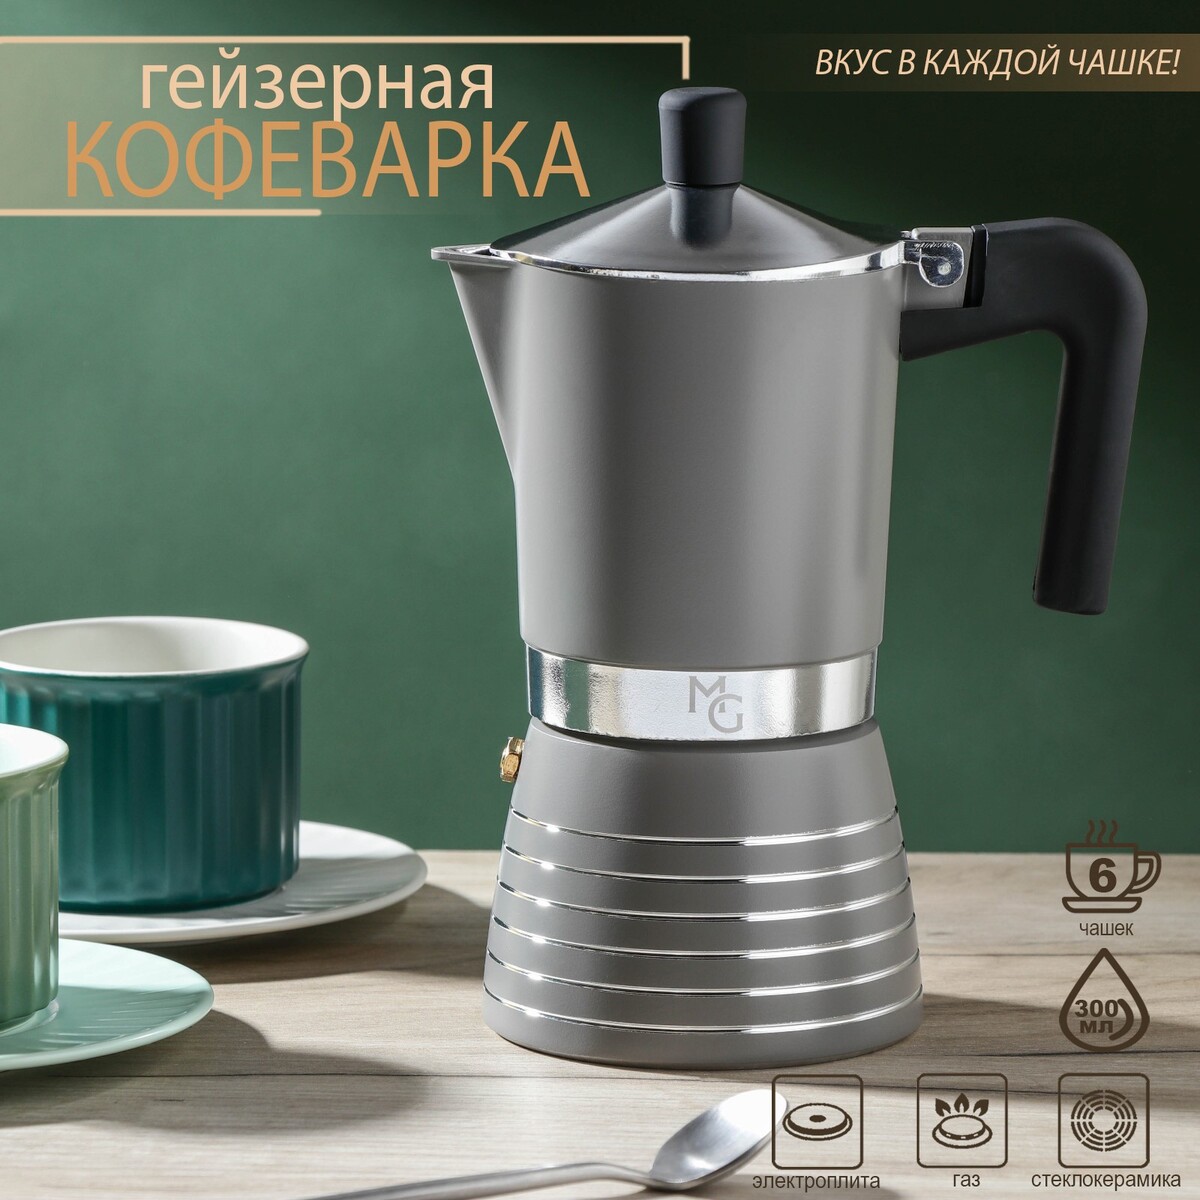 Кофеварка гейзерная magistro moka, на 6 чашек, 300 мл кофеварка гейзерная 330 мл vinzer latte nero 6 чашек